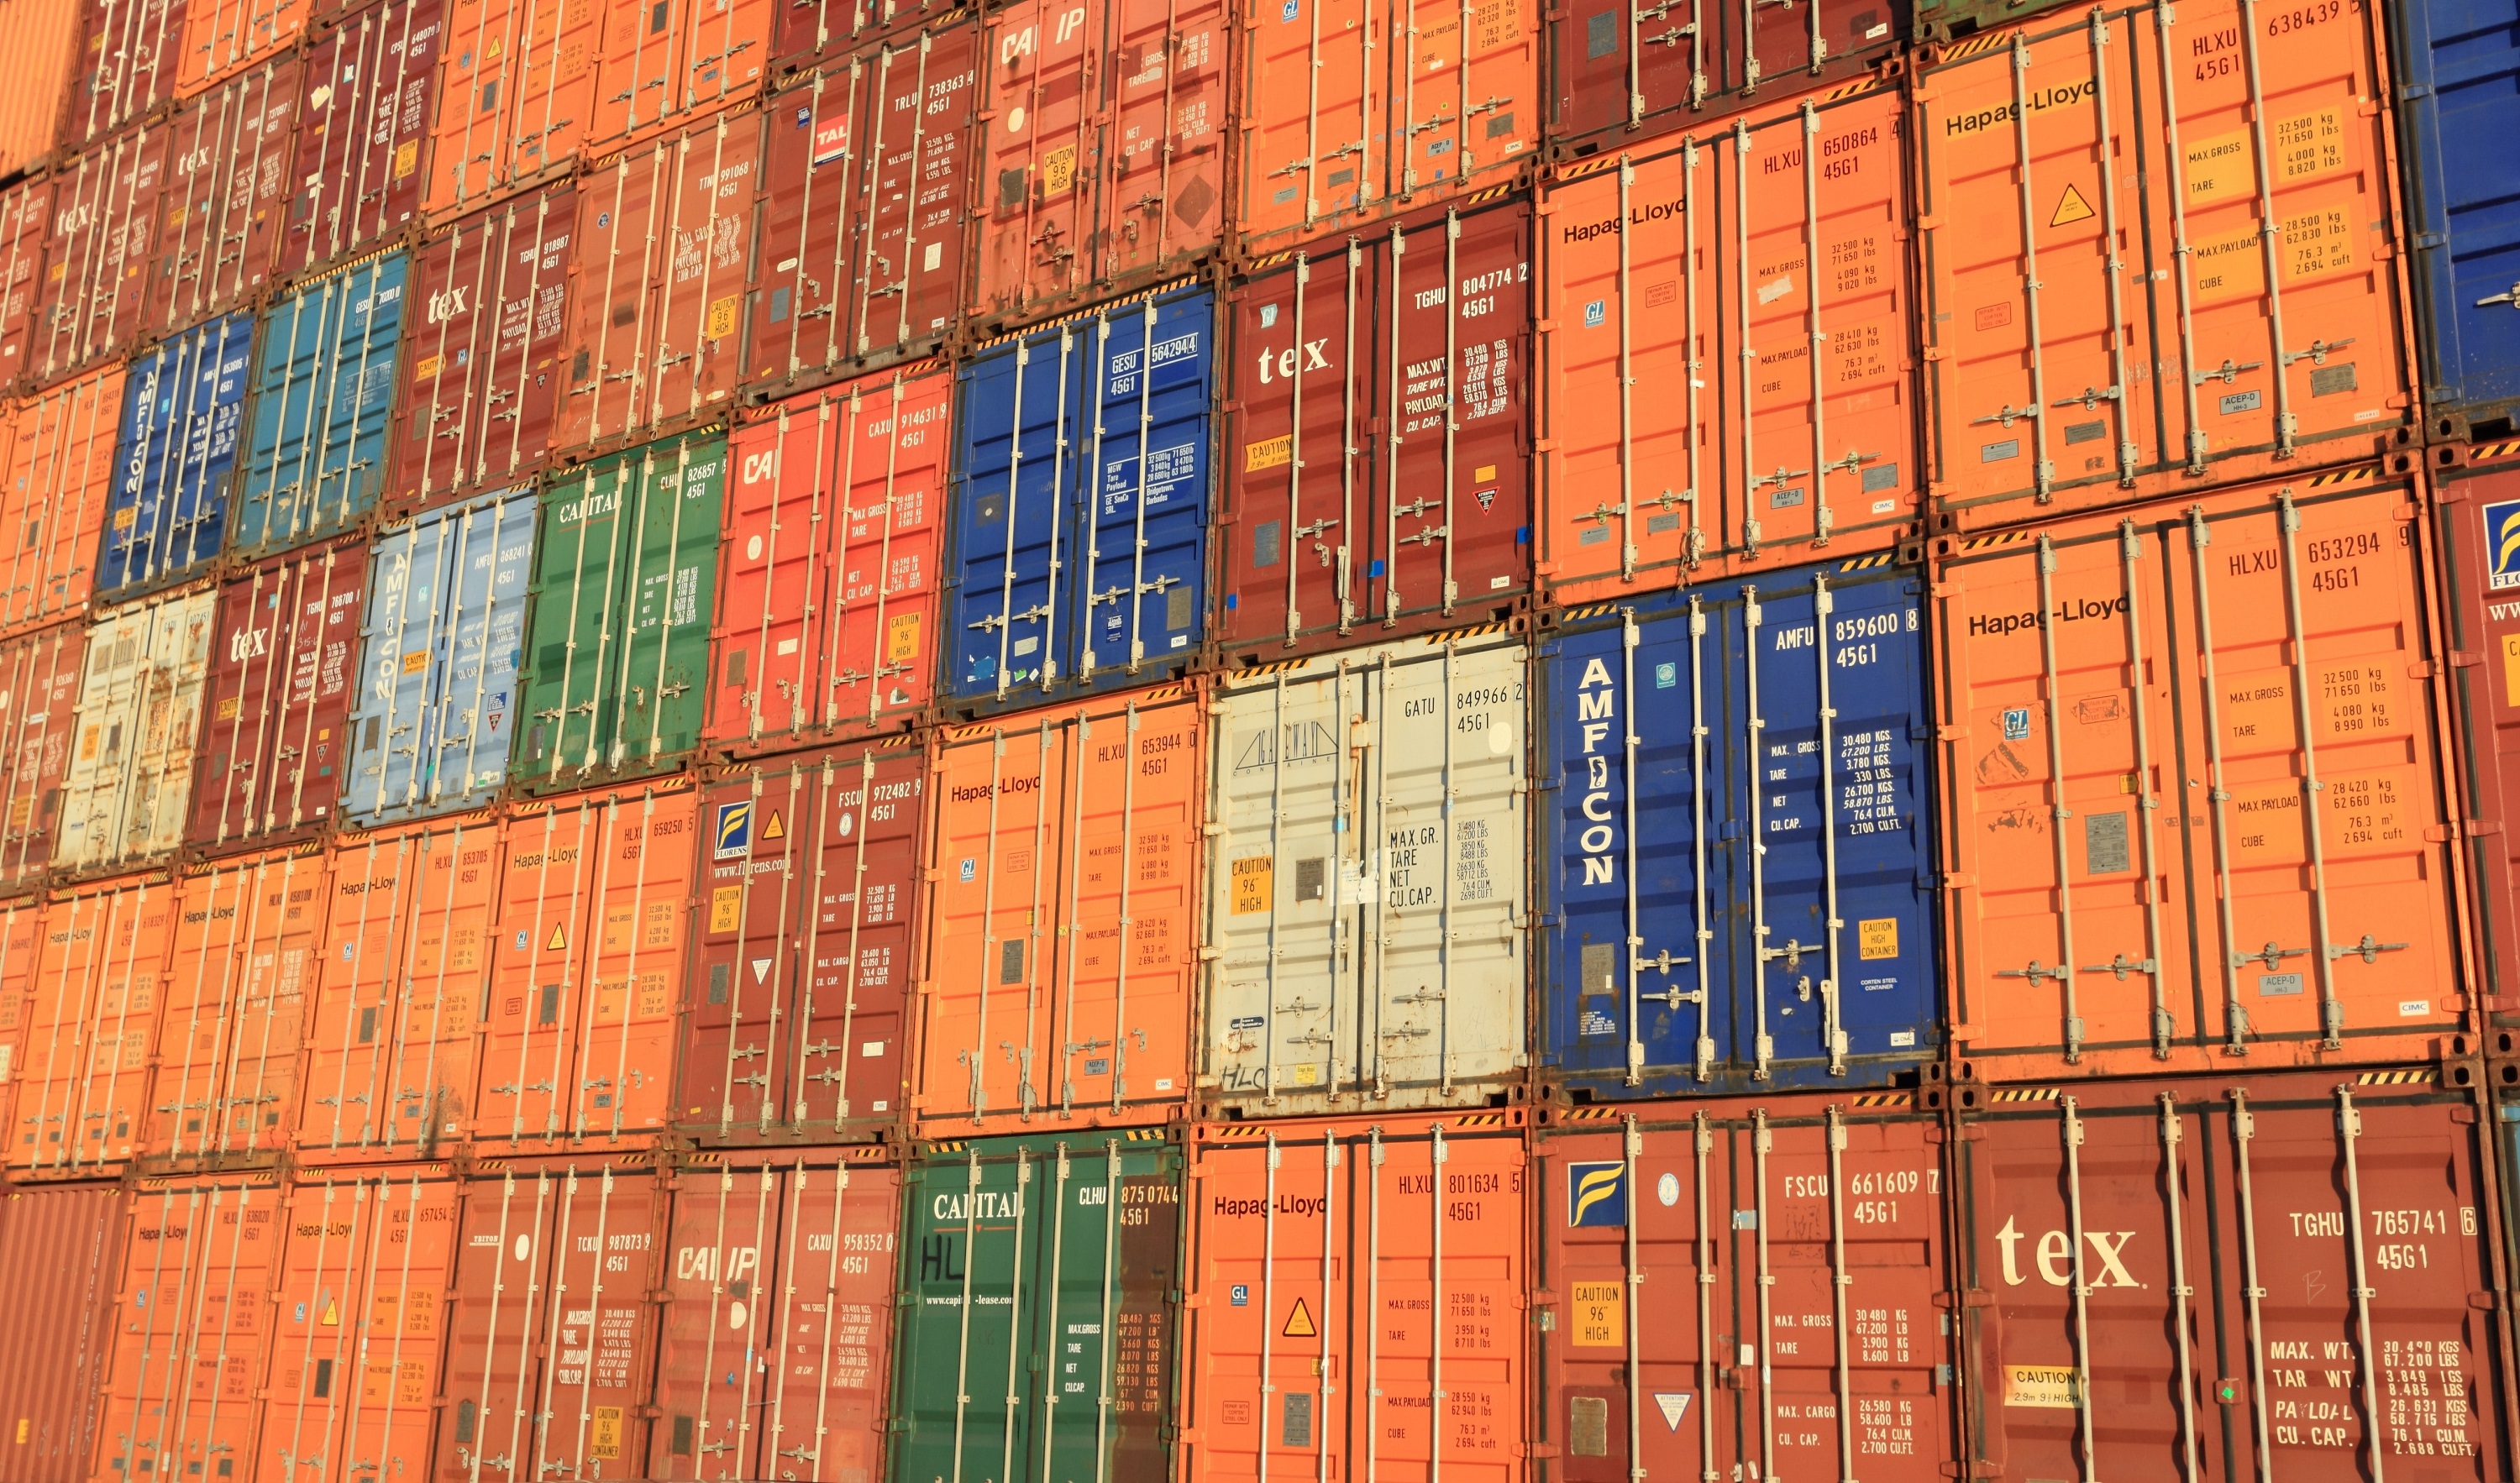 ACI eManifest Detailed Cargo Description Requirements for Commercial Shipments